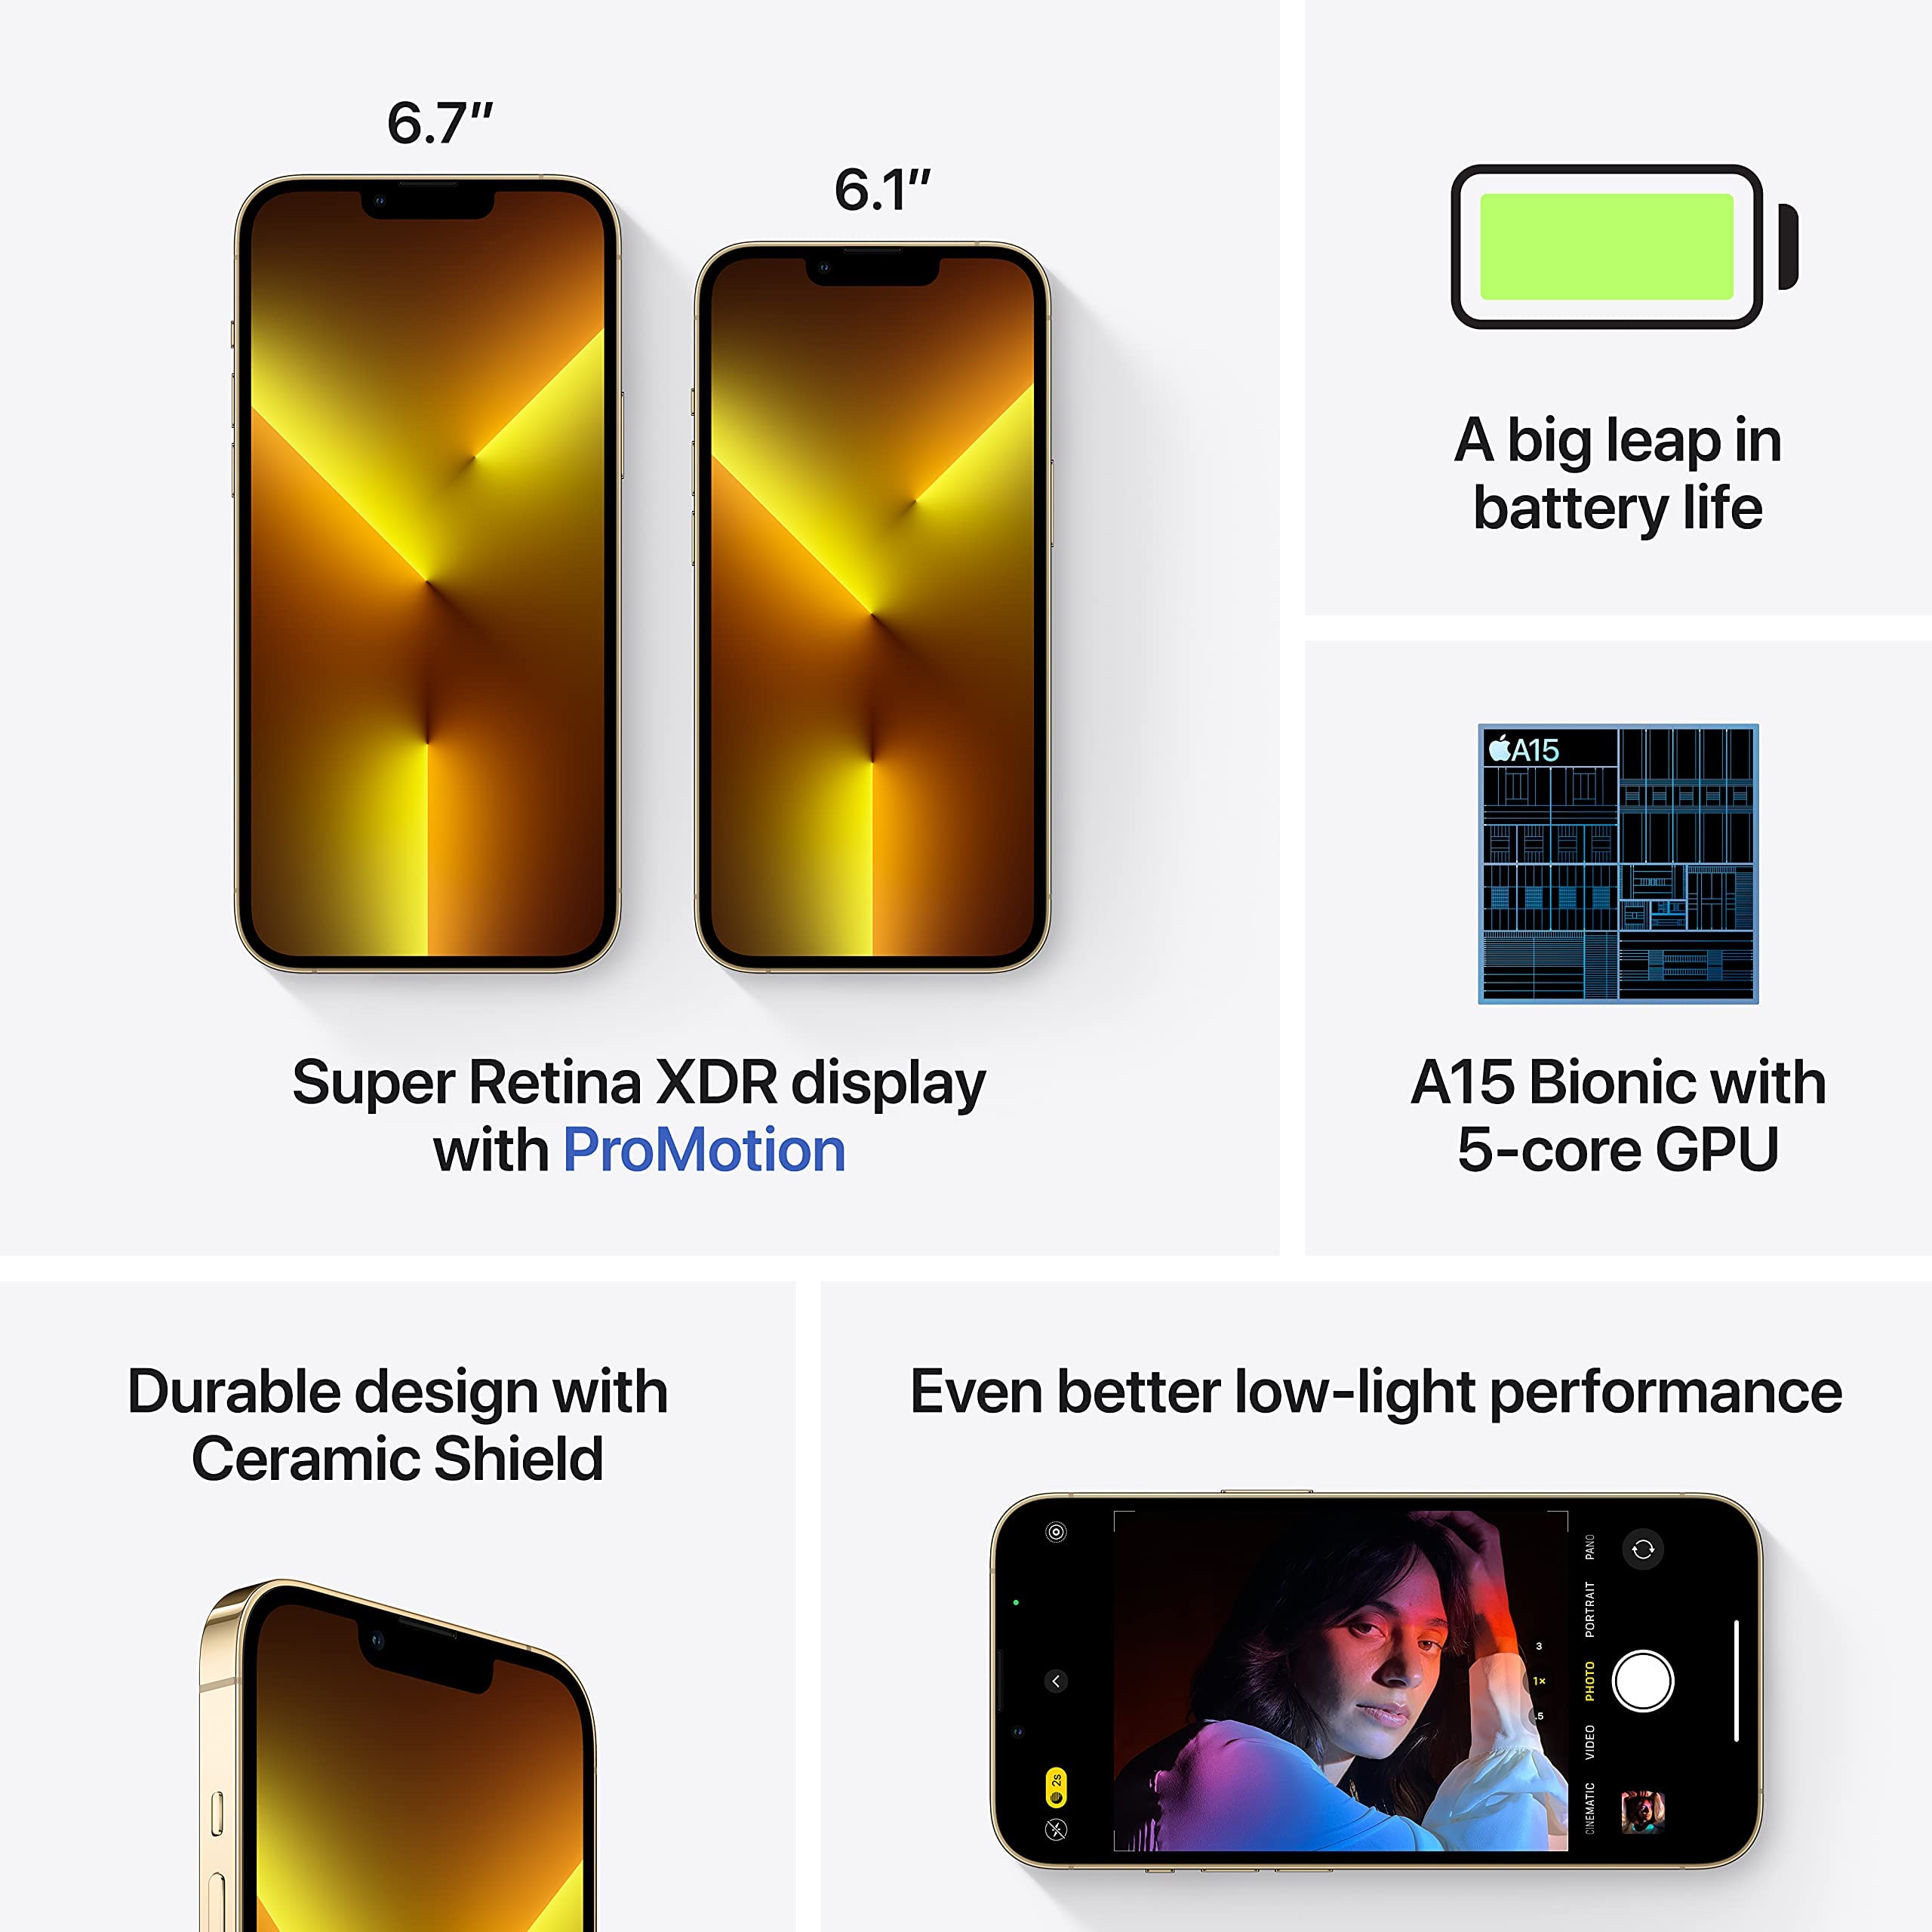 iPhone 13 Pro Max, 128GB, Gold - Unlocked (Renewed Premium)